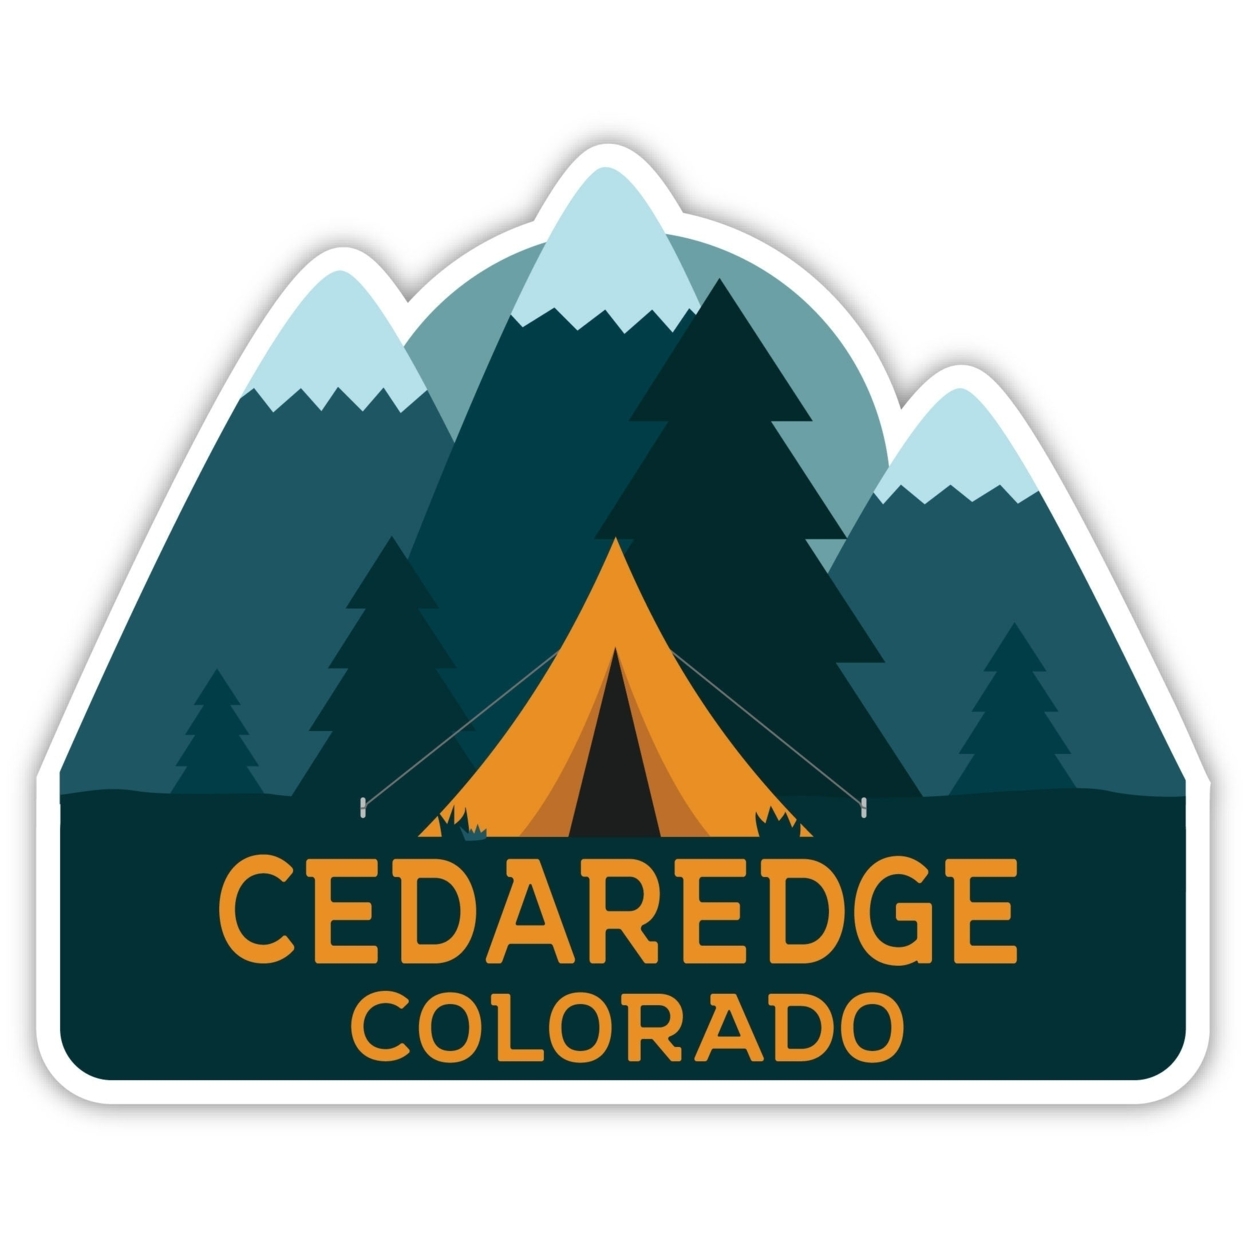 Cedaredge Colorado Souvenir Decorative Stickers (Choose Theme And Size) - 4-Pack, 2-Inch, Tent